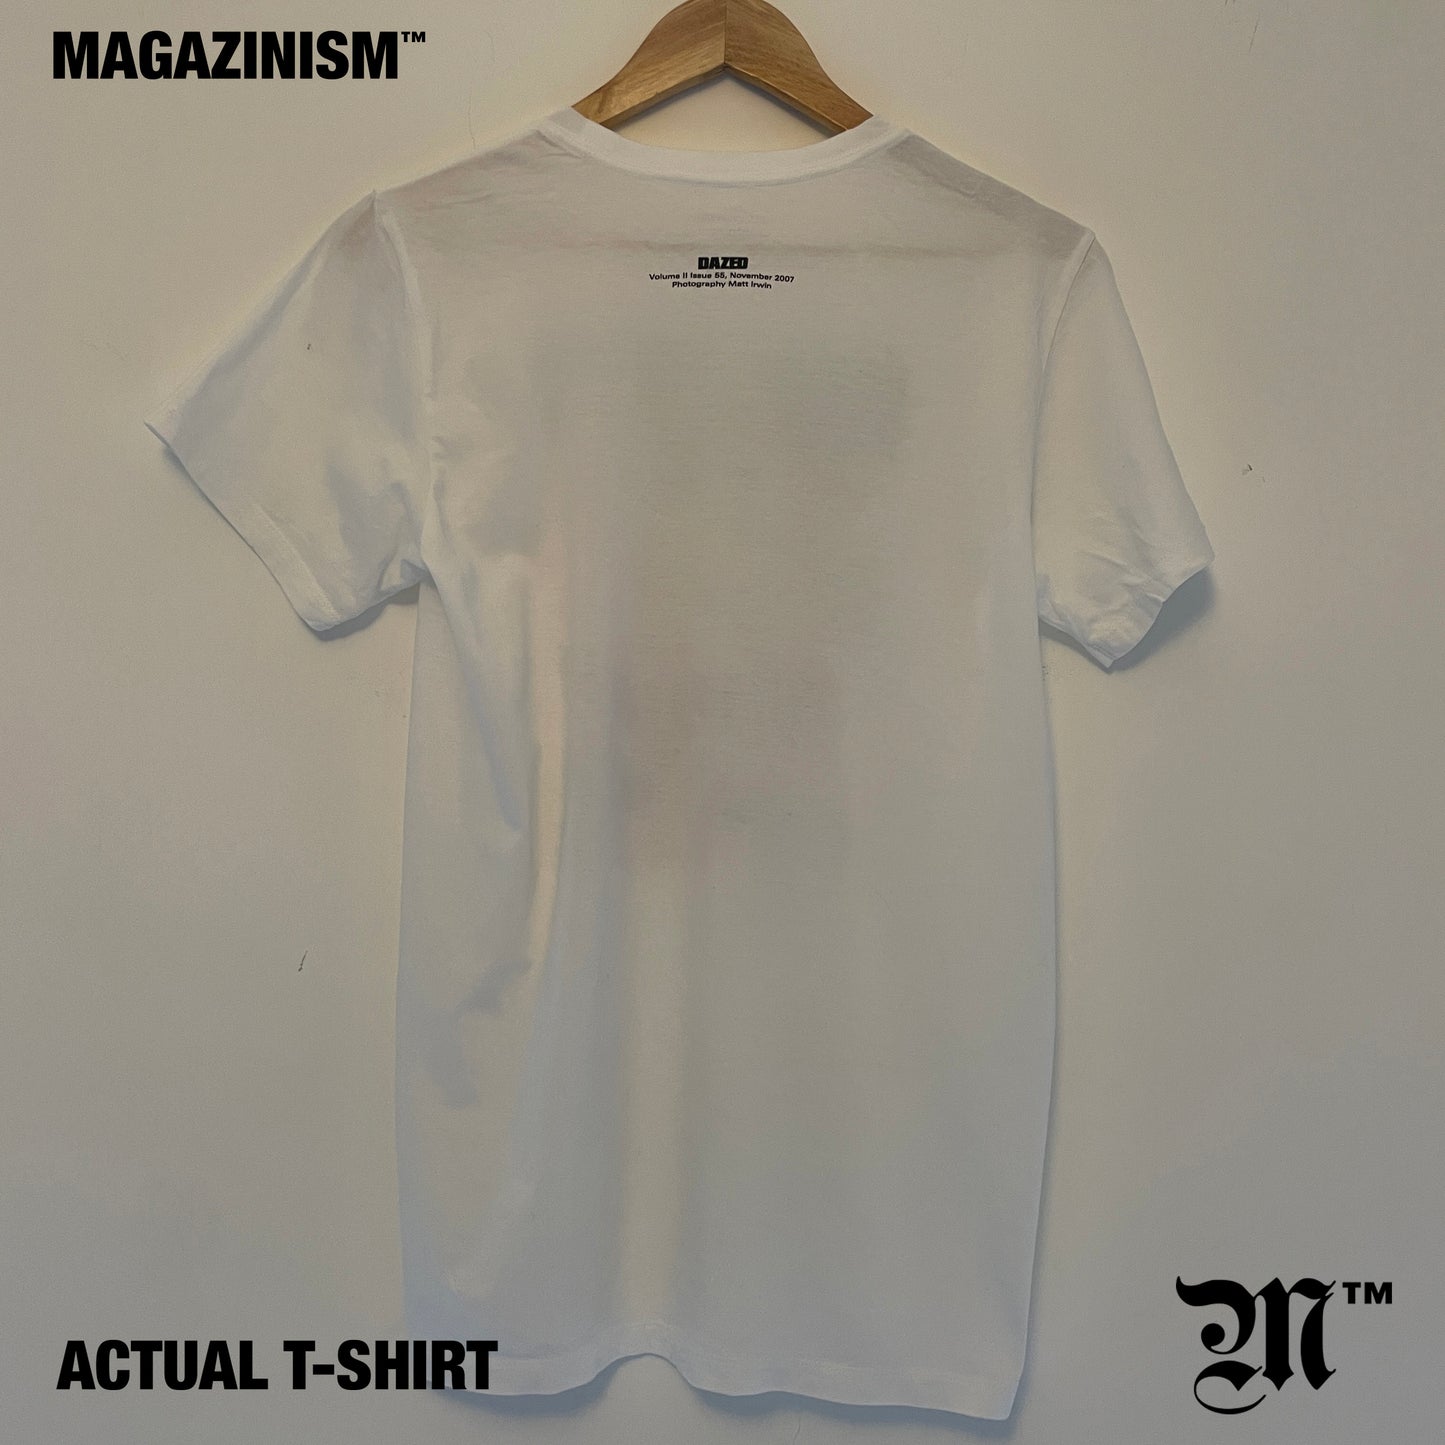 Dazed & Confused X Calvin Klein T-shirt